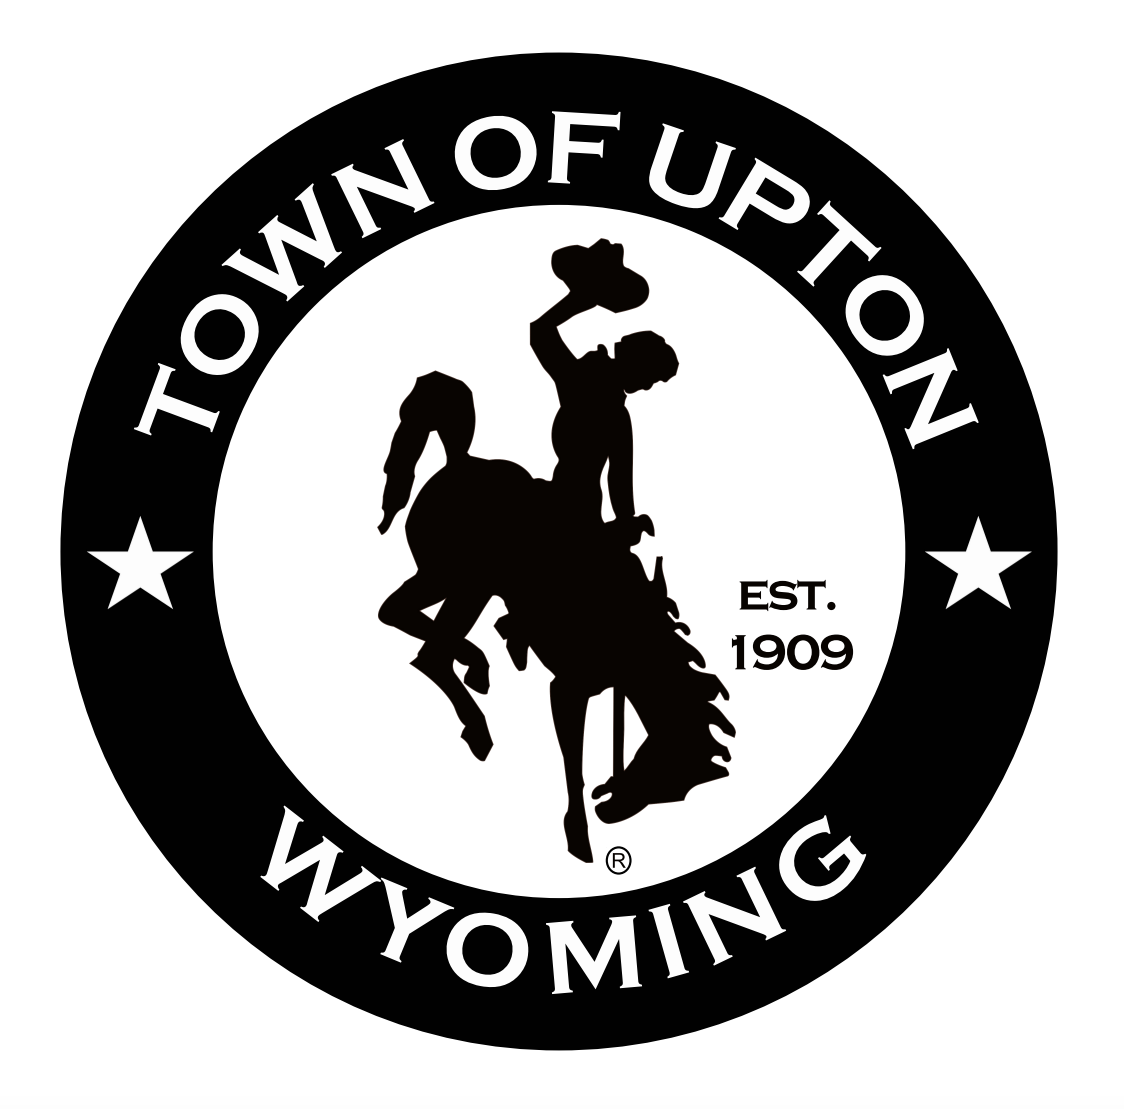 Town of Upton's Logo